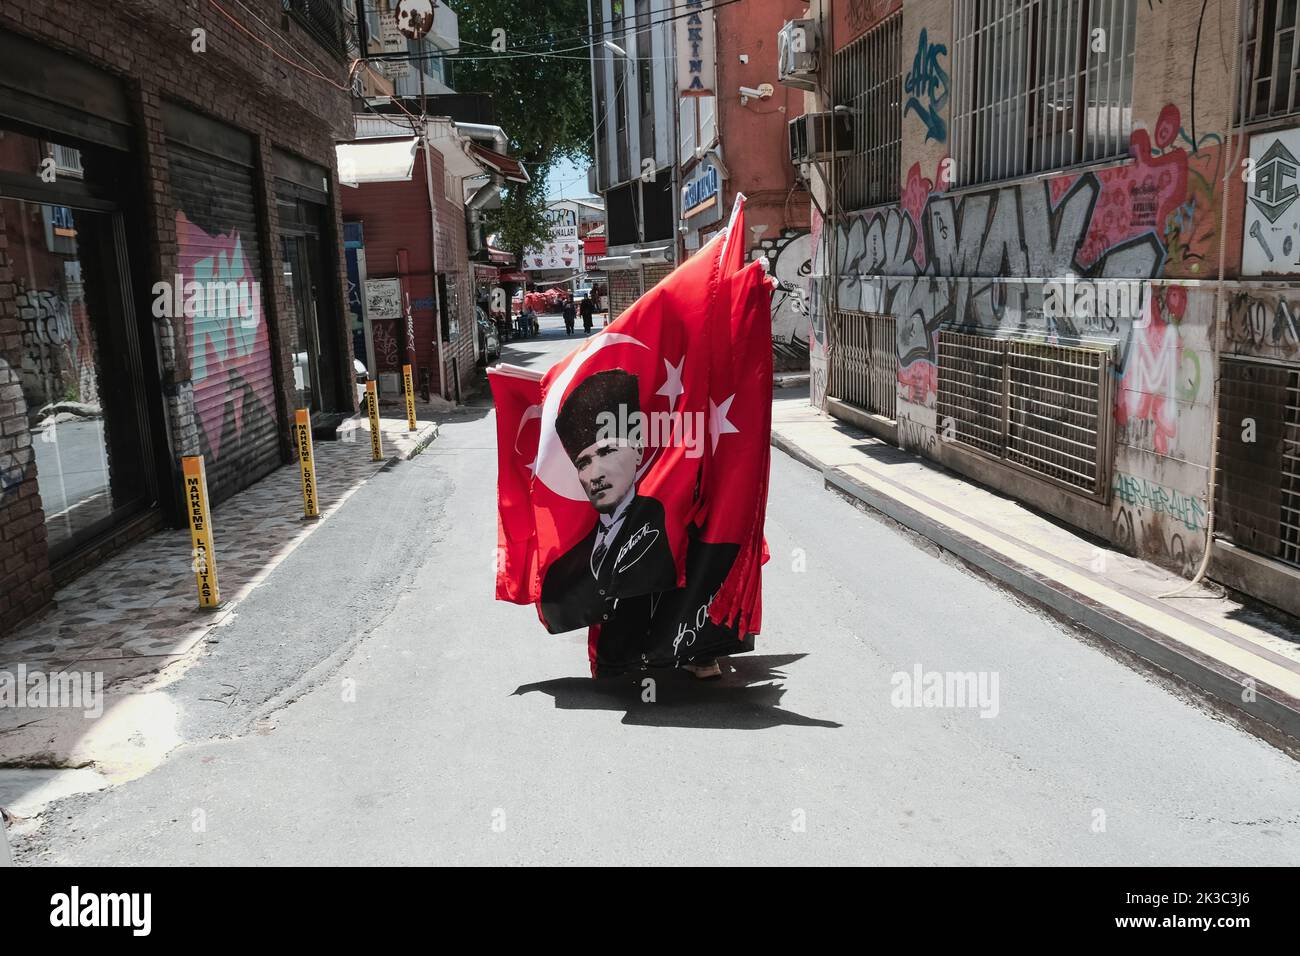 Flag seller walking on the street with turkey flags, Ataturk flag, Eminonu Karakoy streets, Turkey national celebration concept, capture moment Stock Photo